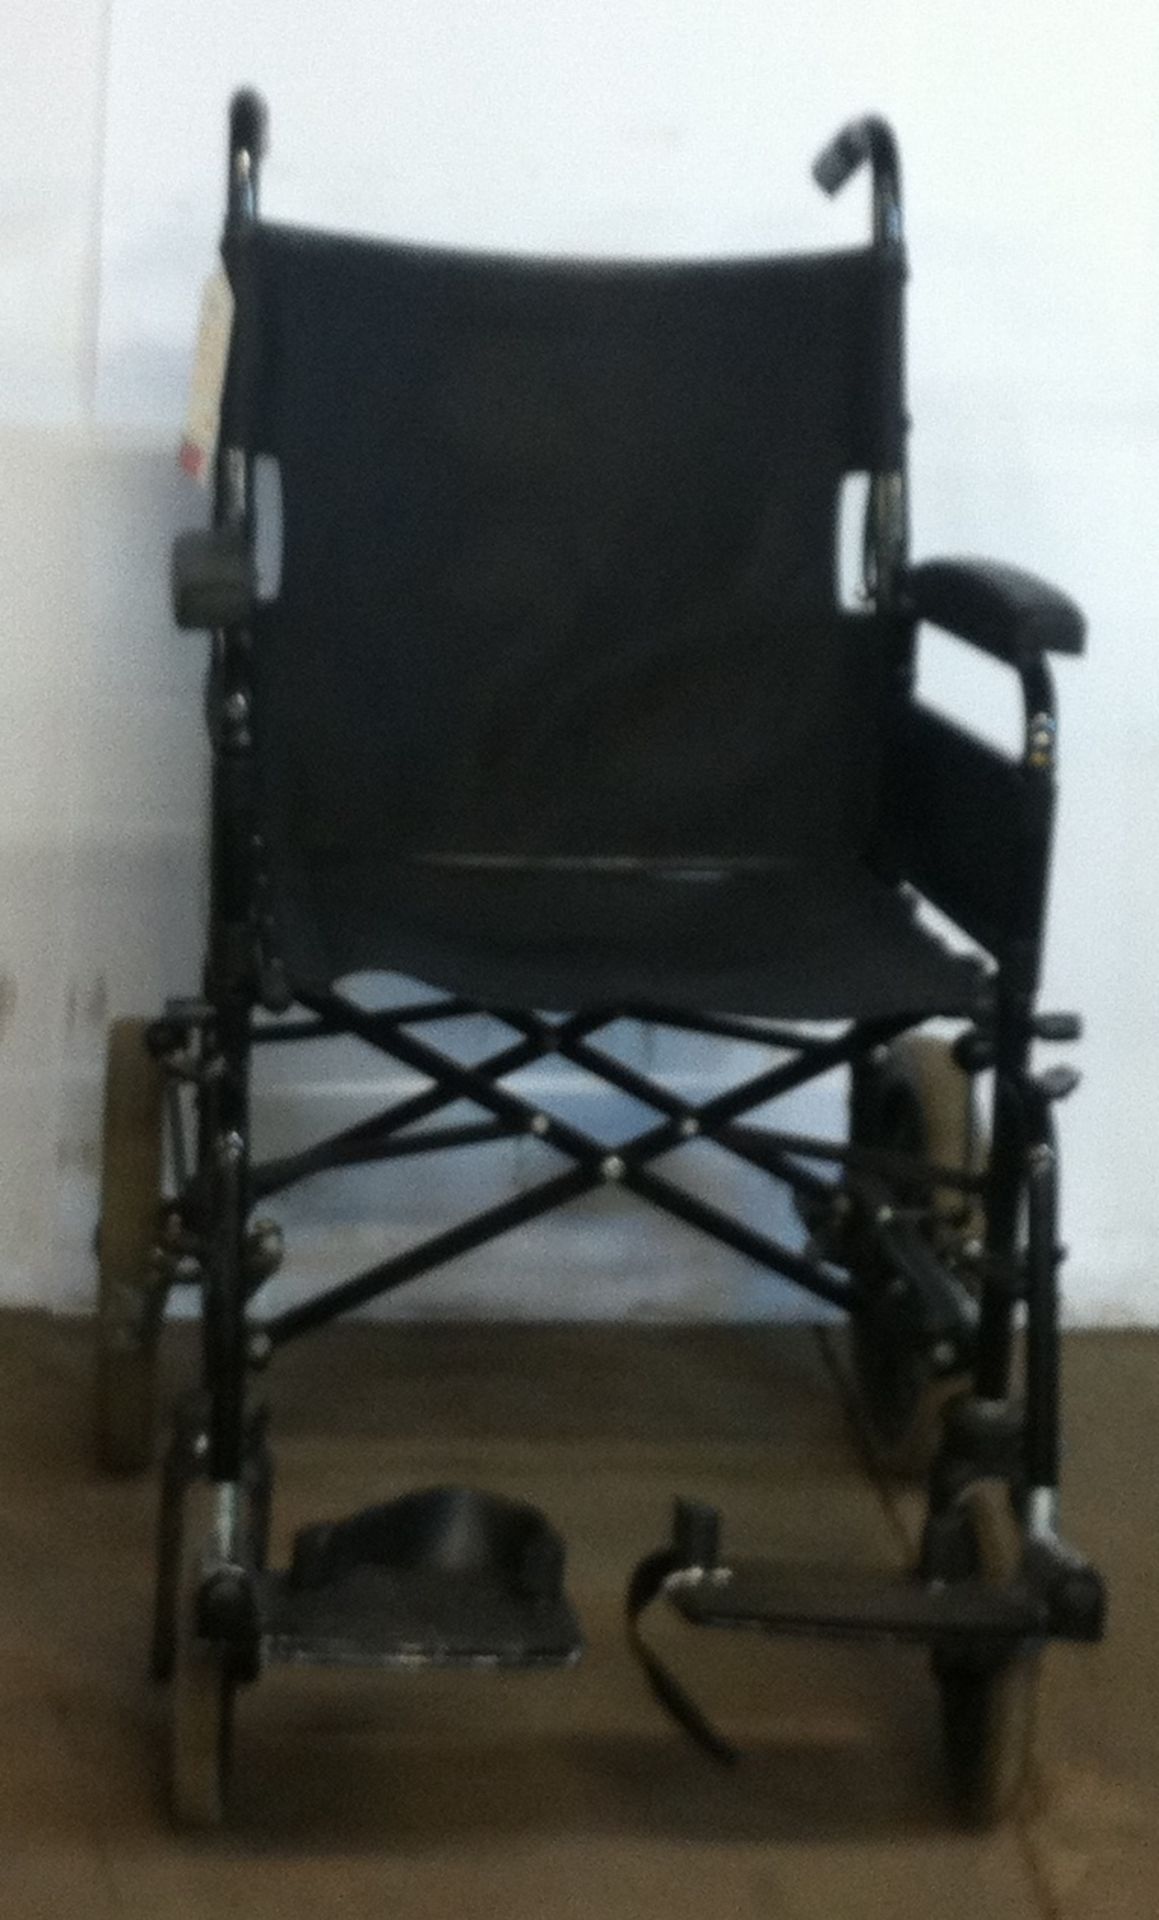 5 Wheelchairs - As per Description